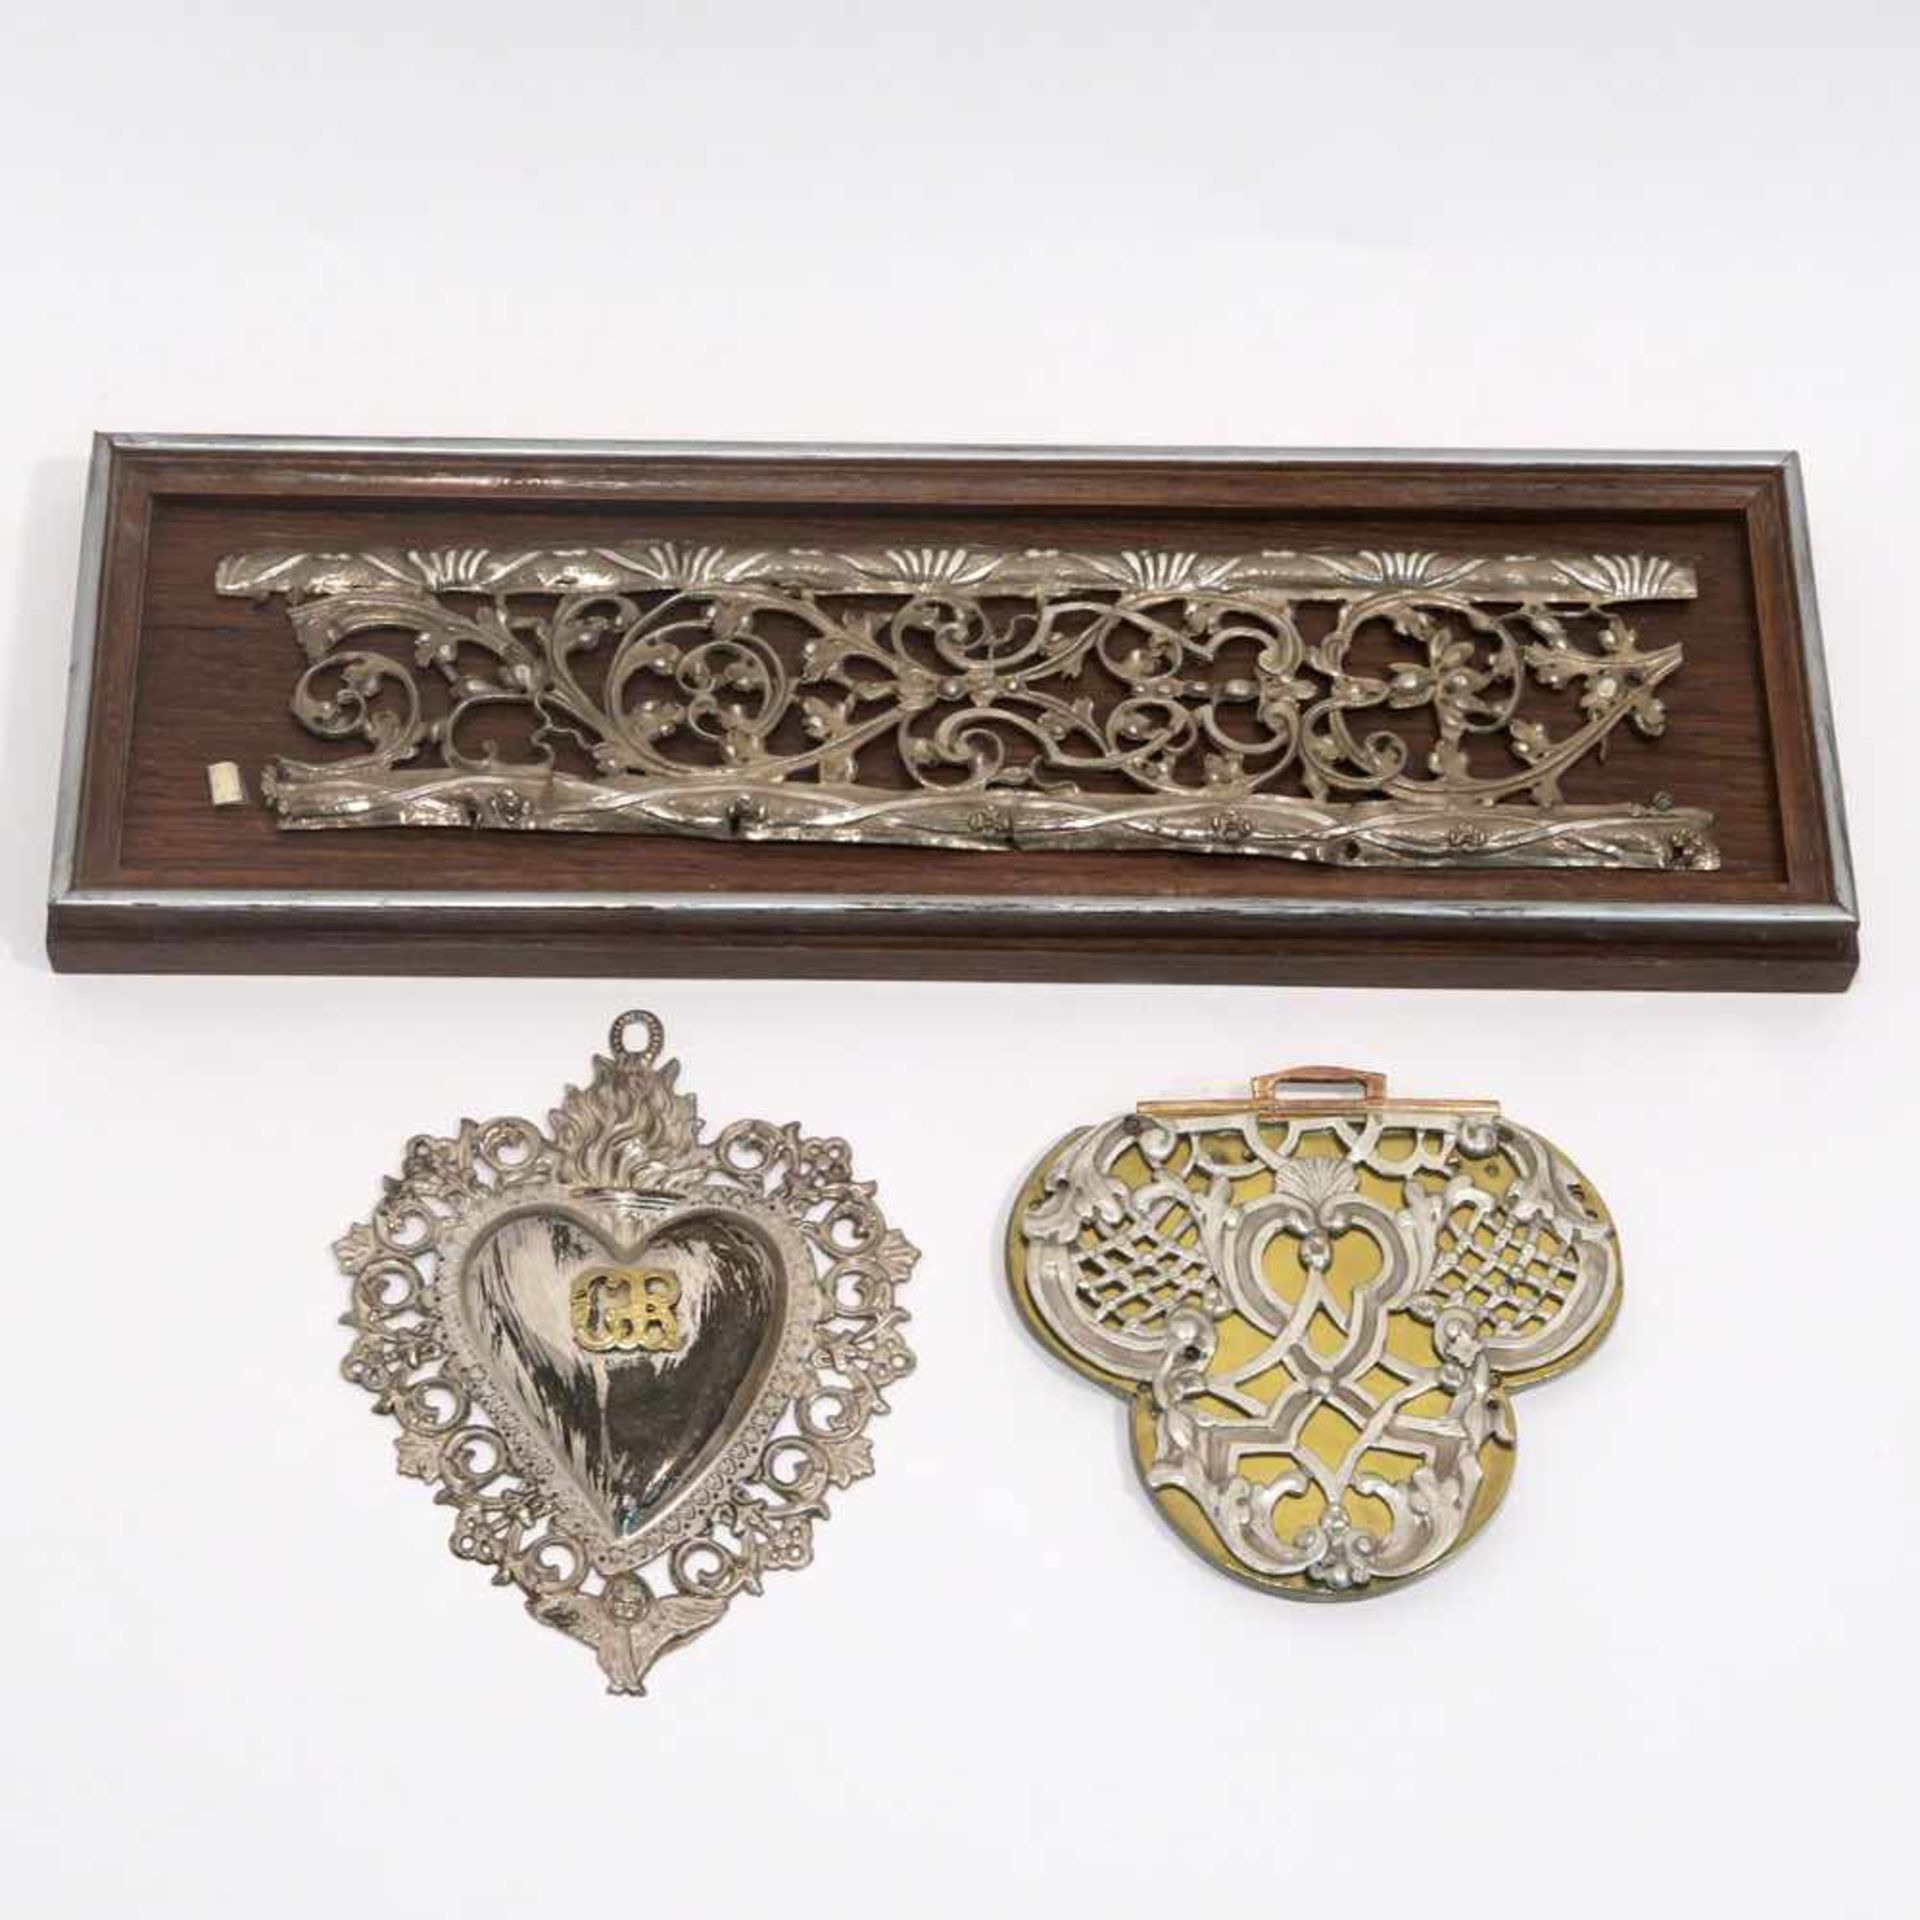 Zwei Silberbeschlag-OrnamenteSilber, auf Holz bzw. auf Messingblech über Holzkern. Ranken-,